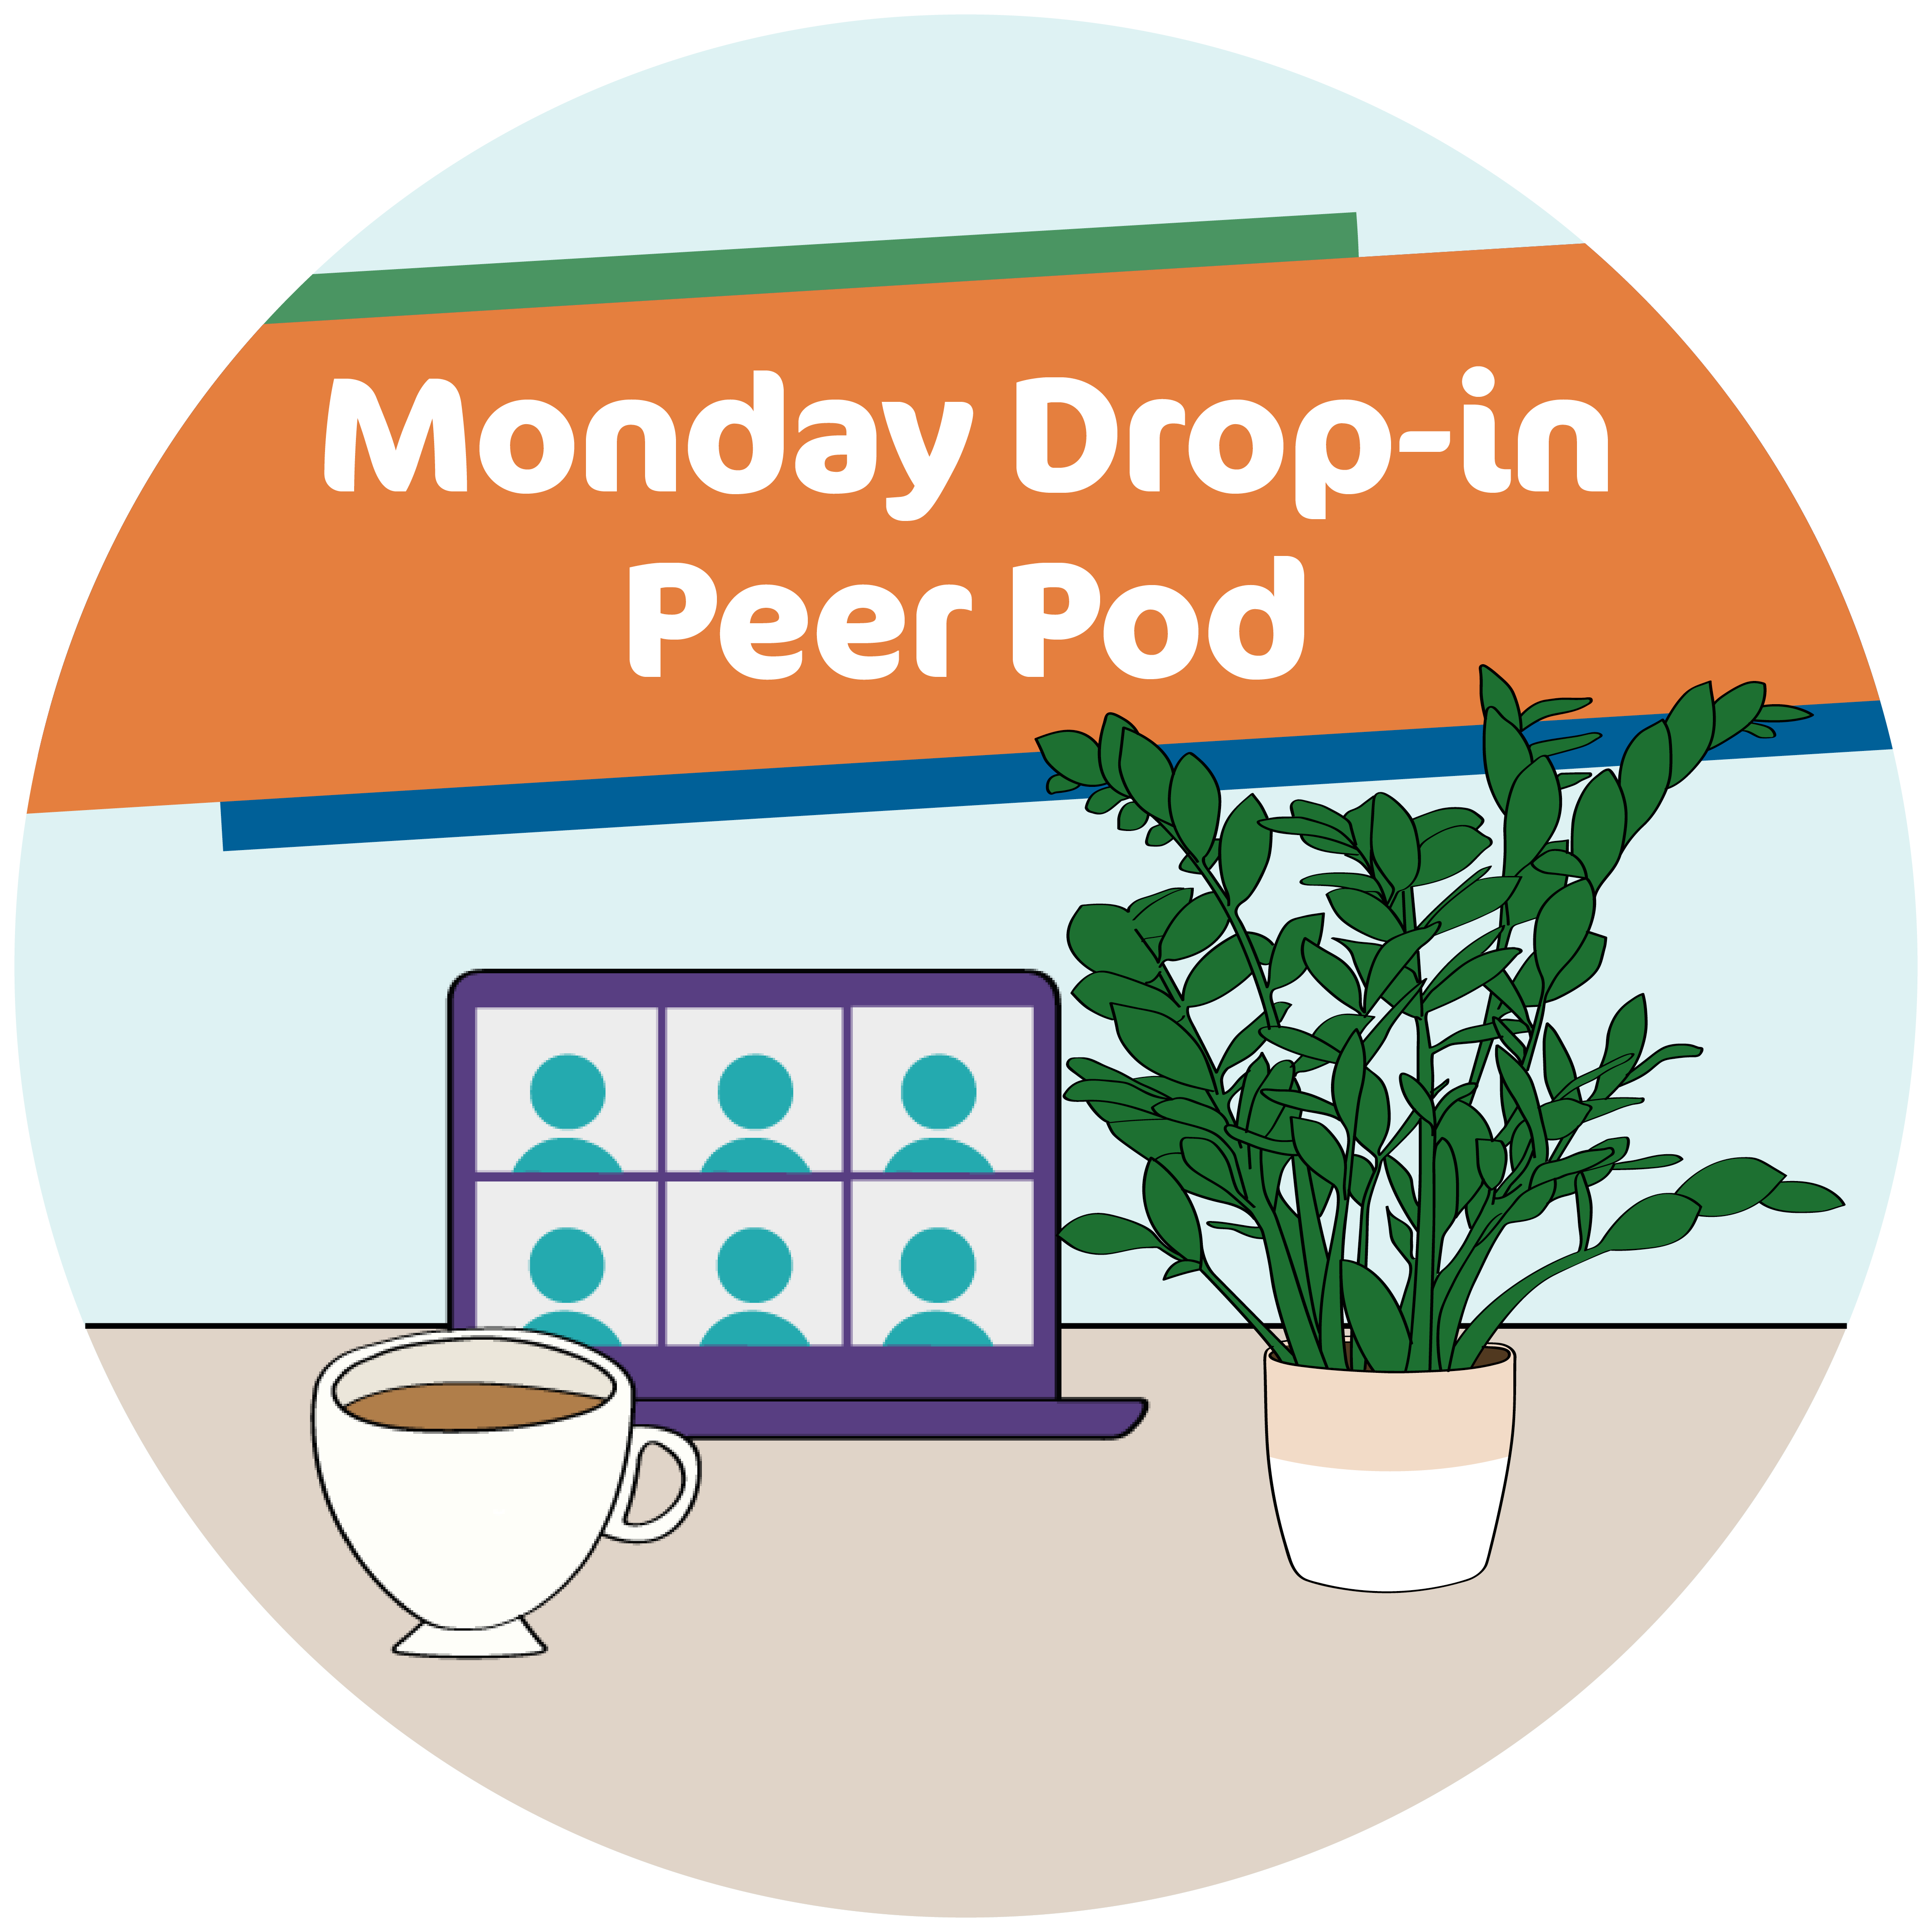 Monday Drop-in Peer pod